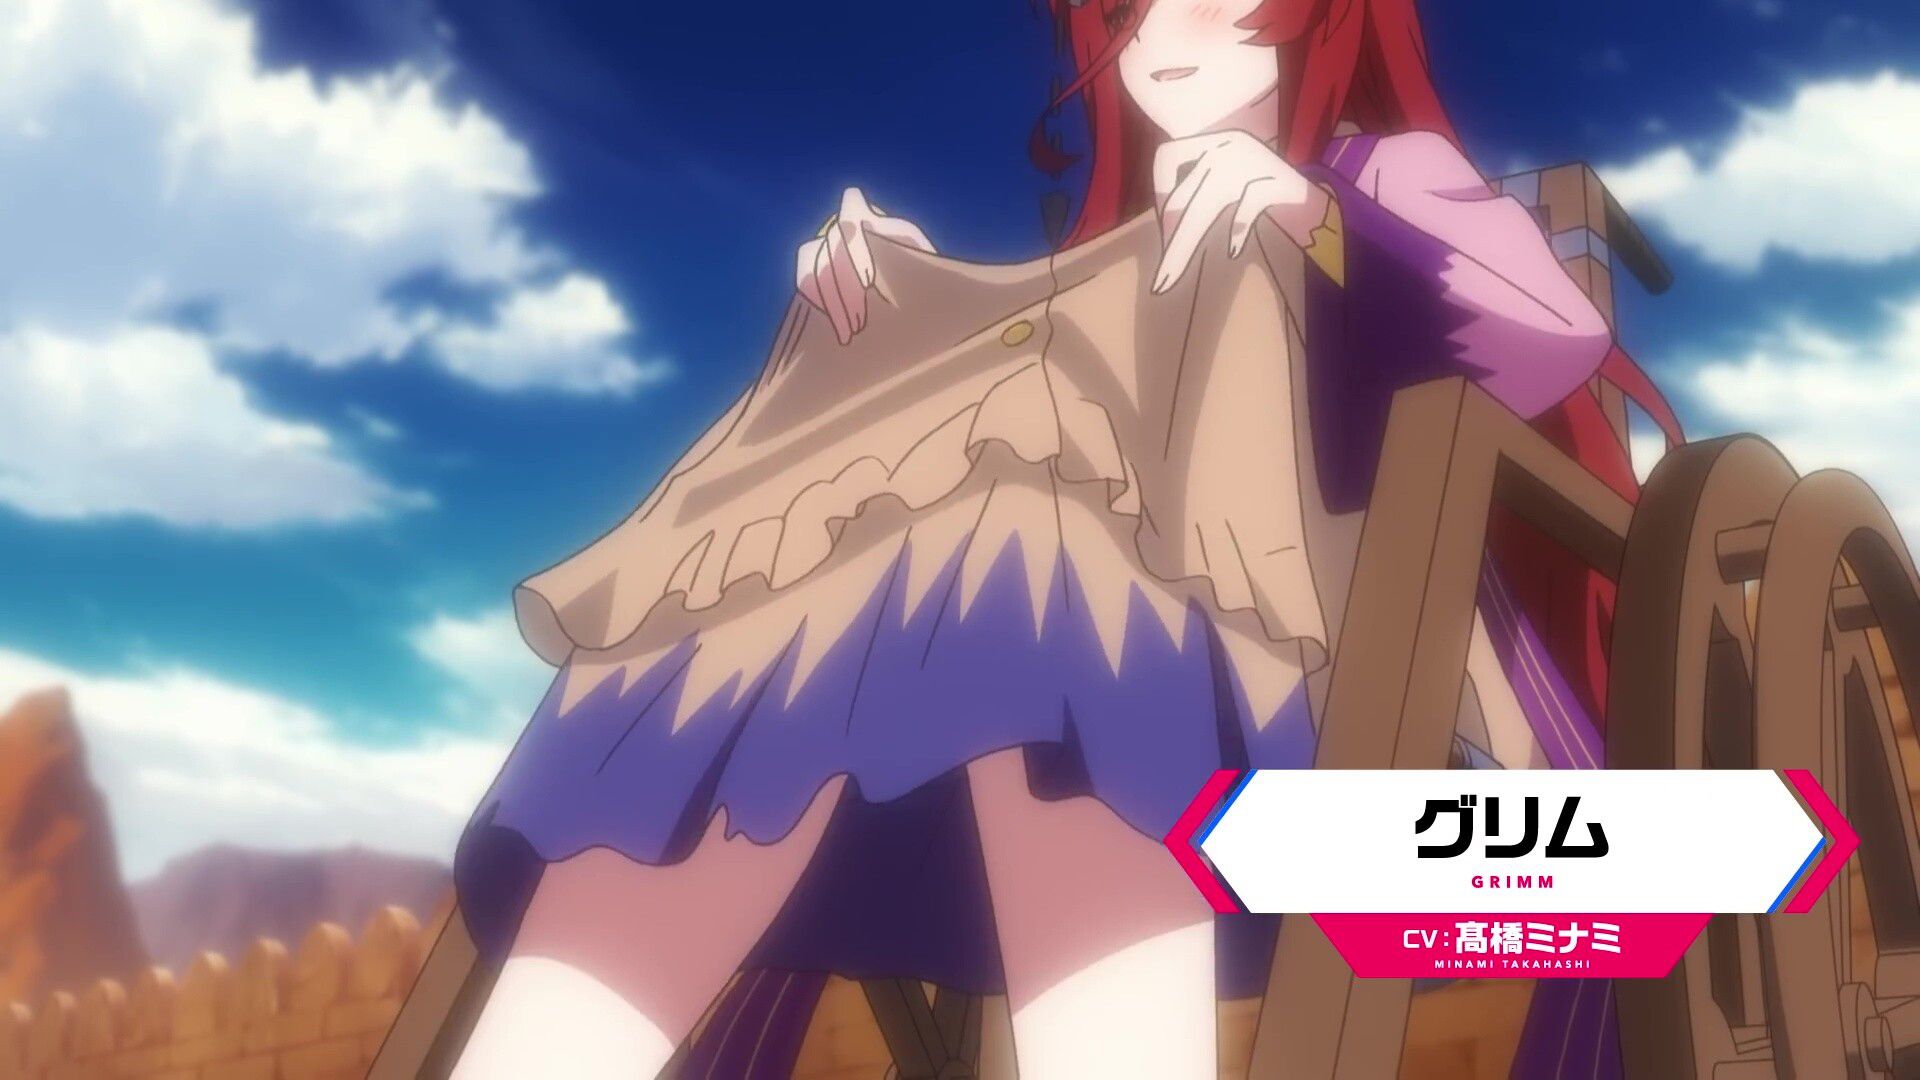 Anime "Combatant, I'm dispatched! Erotic costume girls and neta! April broadcasting starts 23